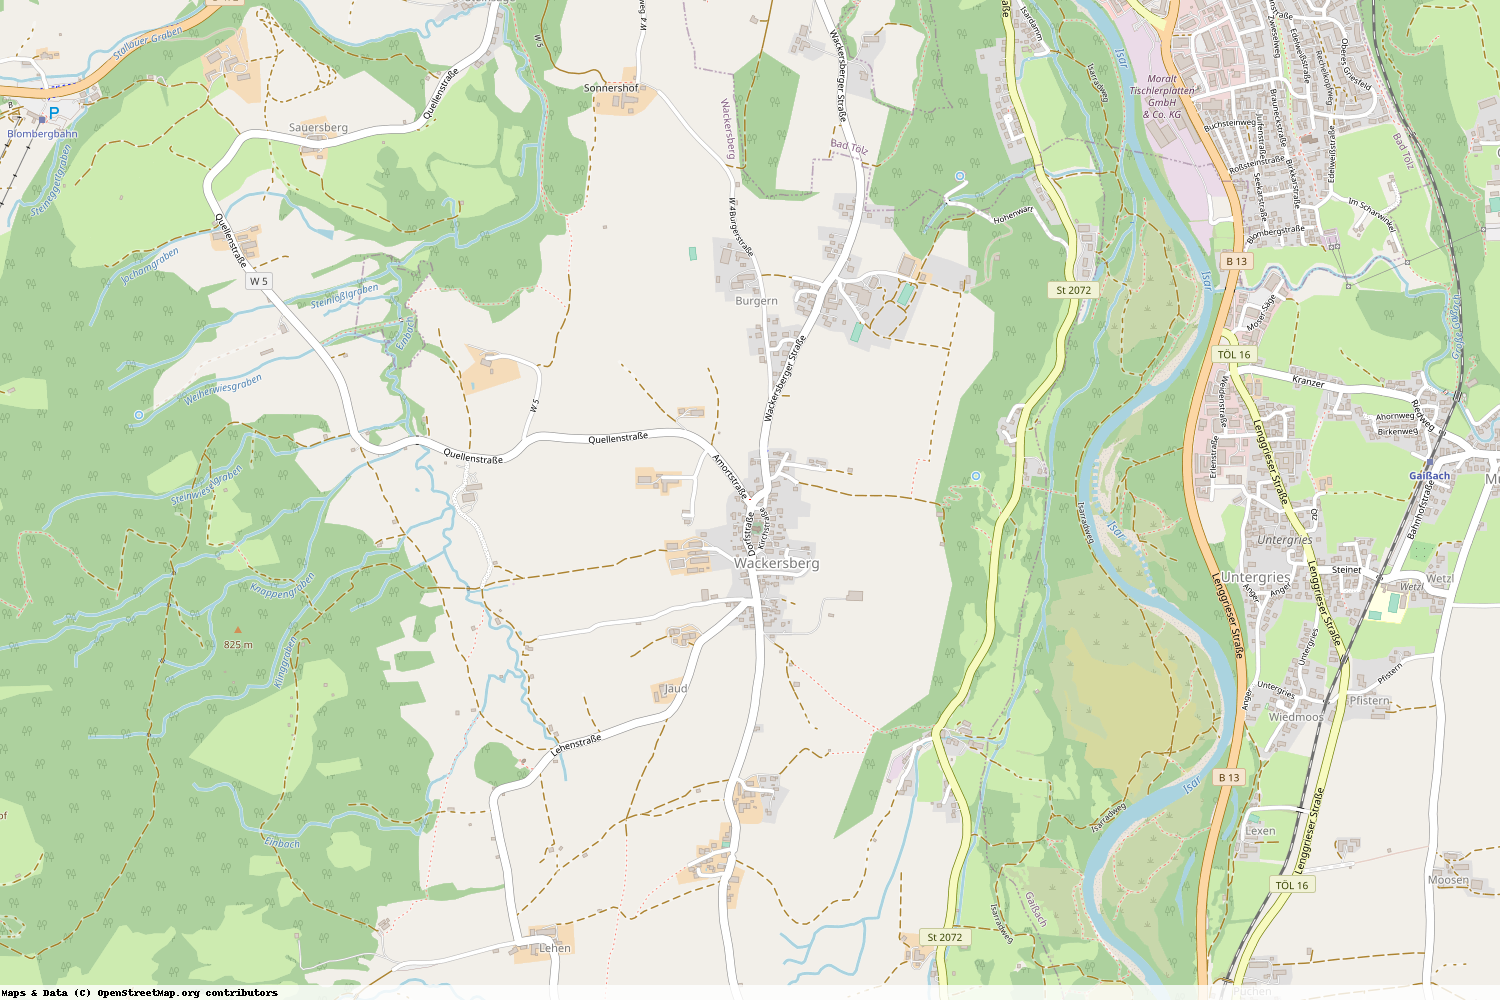 Ist gerade Stromausfall in Bayern - Bad Tölz-Wolfratshausen - Wackersberg?